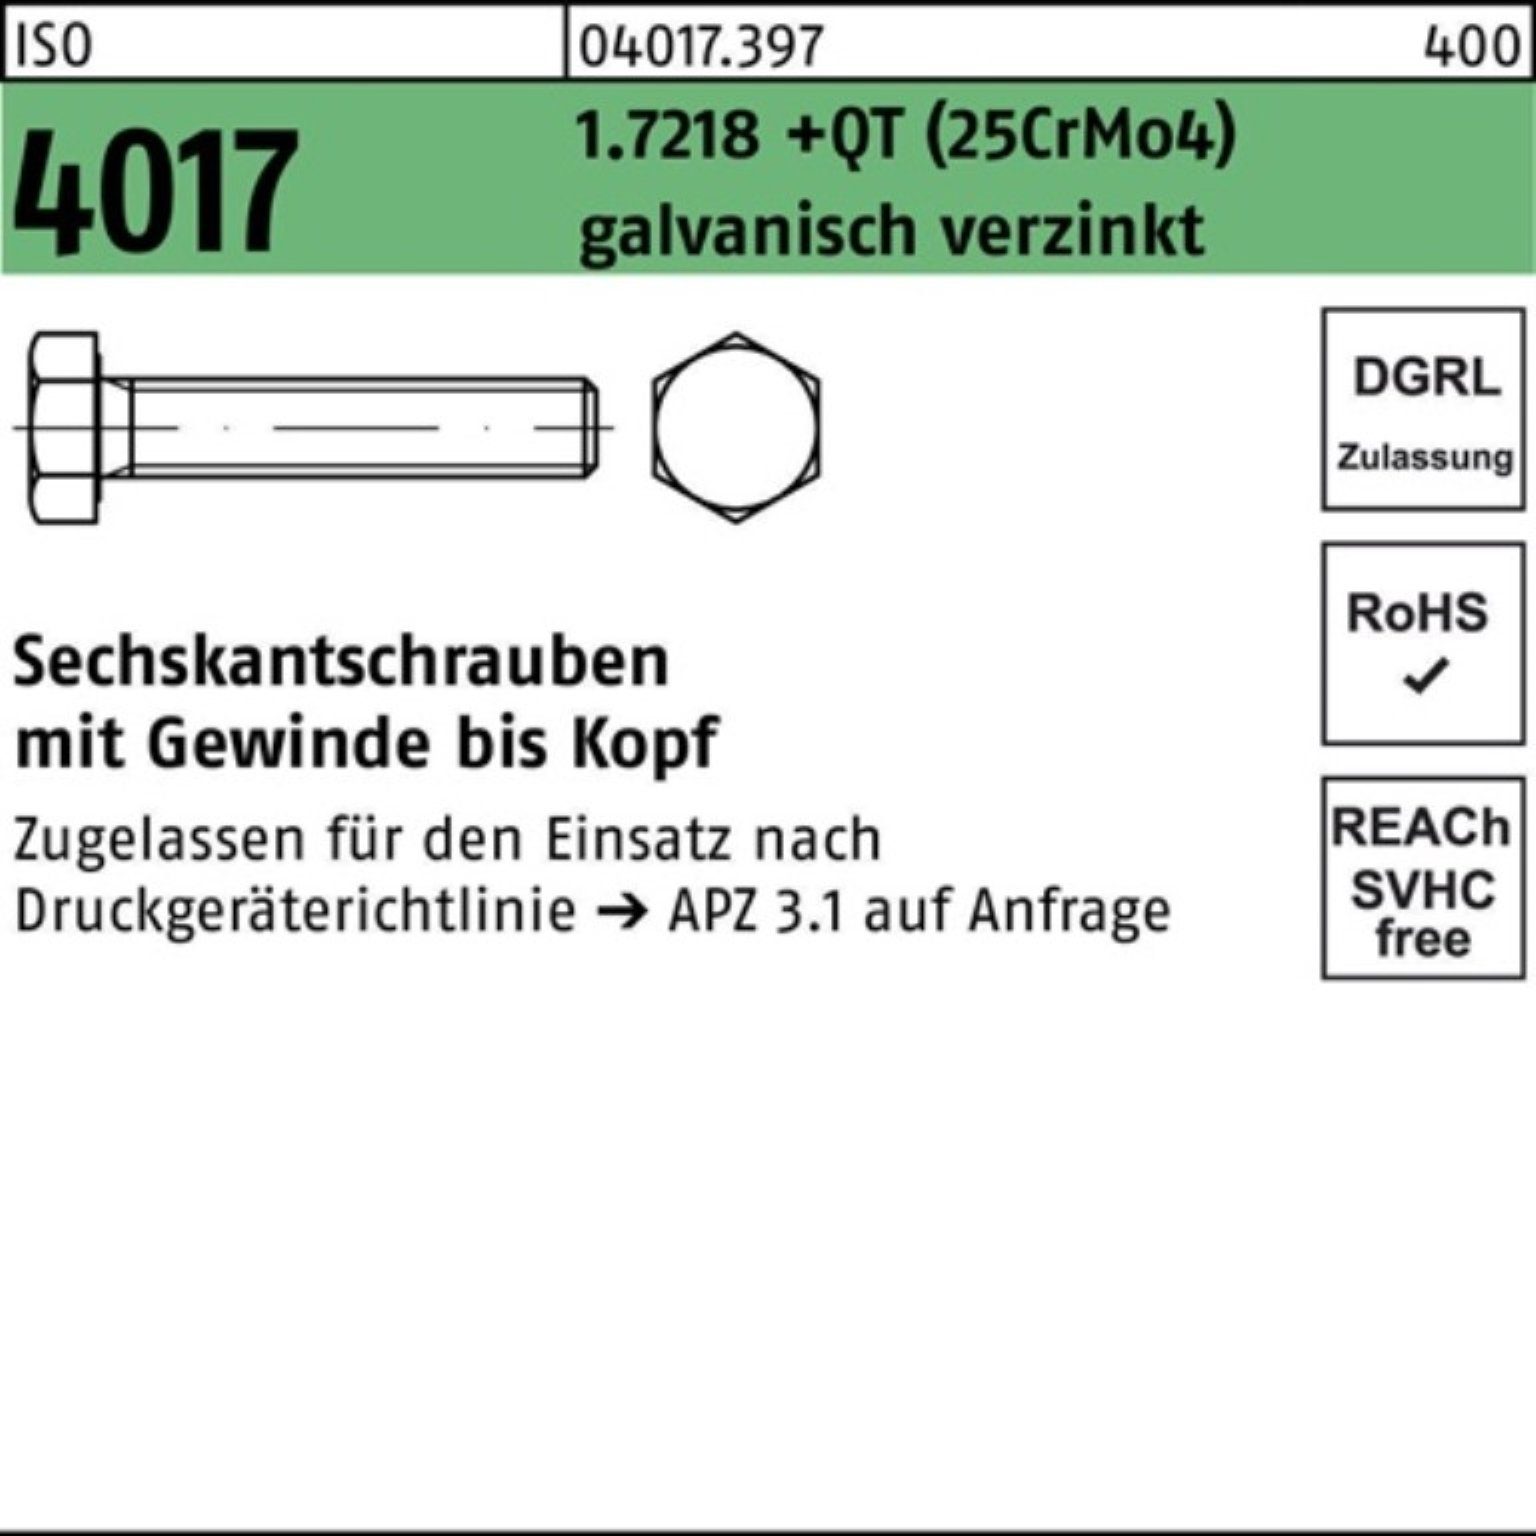 Bufab Sechskantschraube Sechskantschraube 1.7218 M24x70 Pack 100er +QT 4017 (25CrMo4) ISO VG g